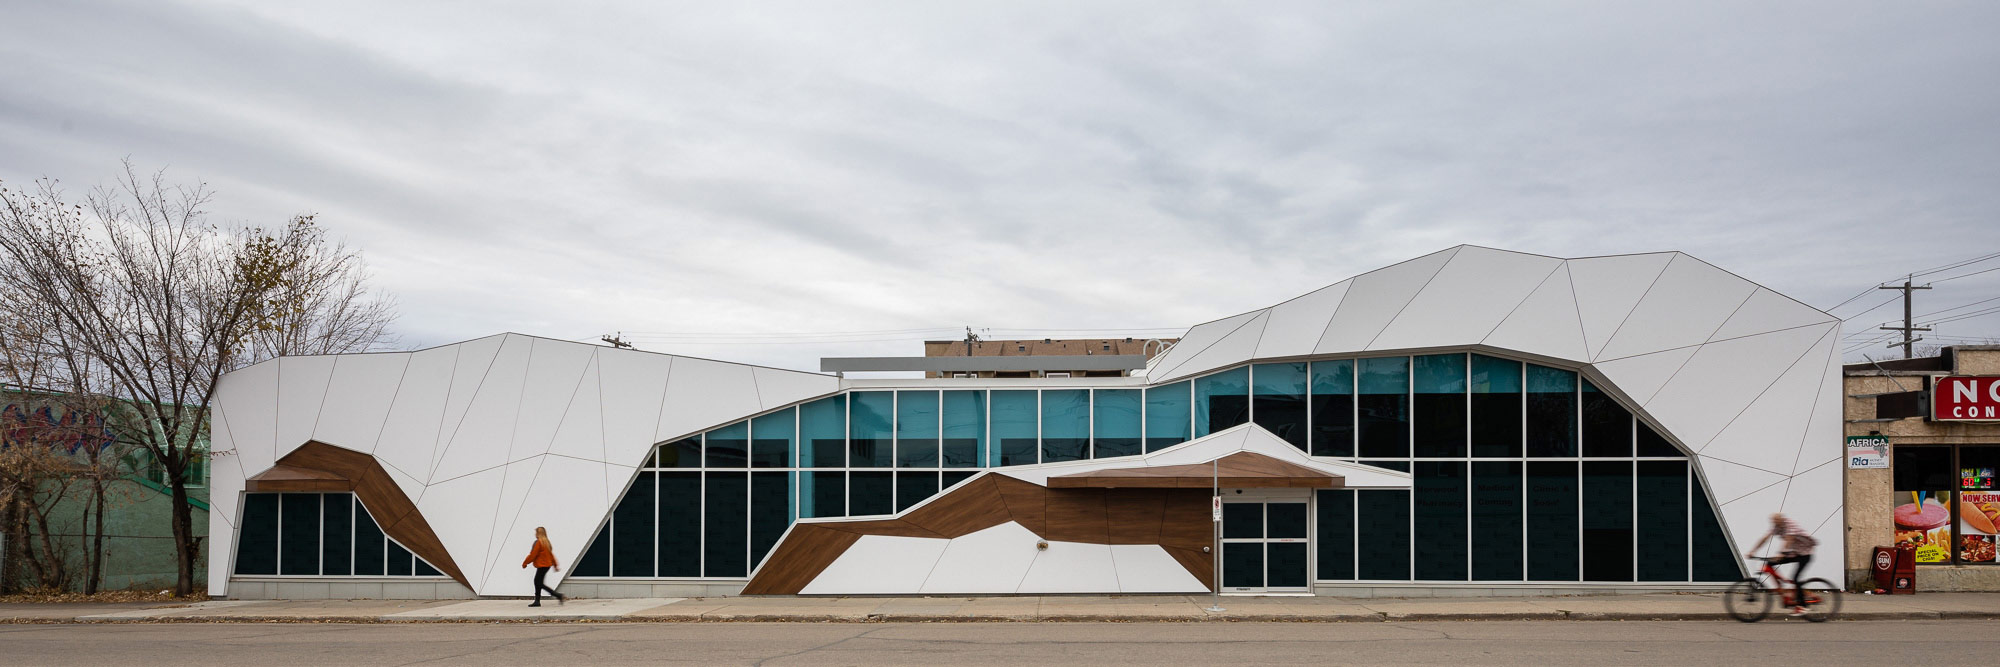 Avid Architecture Edmonton Portfolio